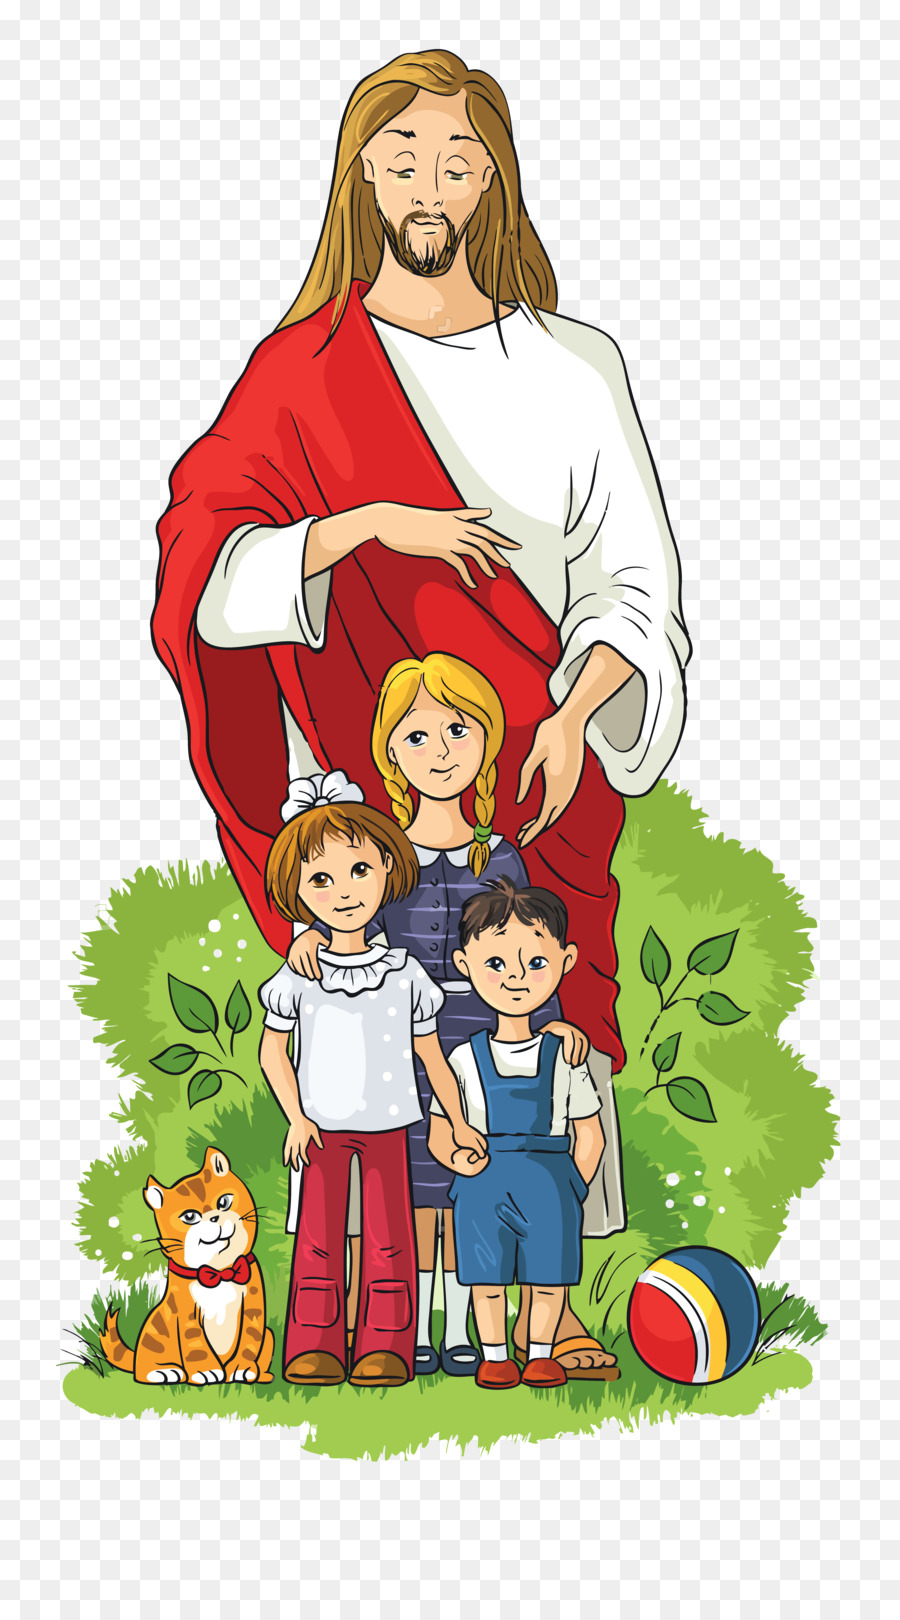 Child Cartoon Clip art - jesus christ png download - 5600*10000 - Free Transparent Child png Download.